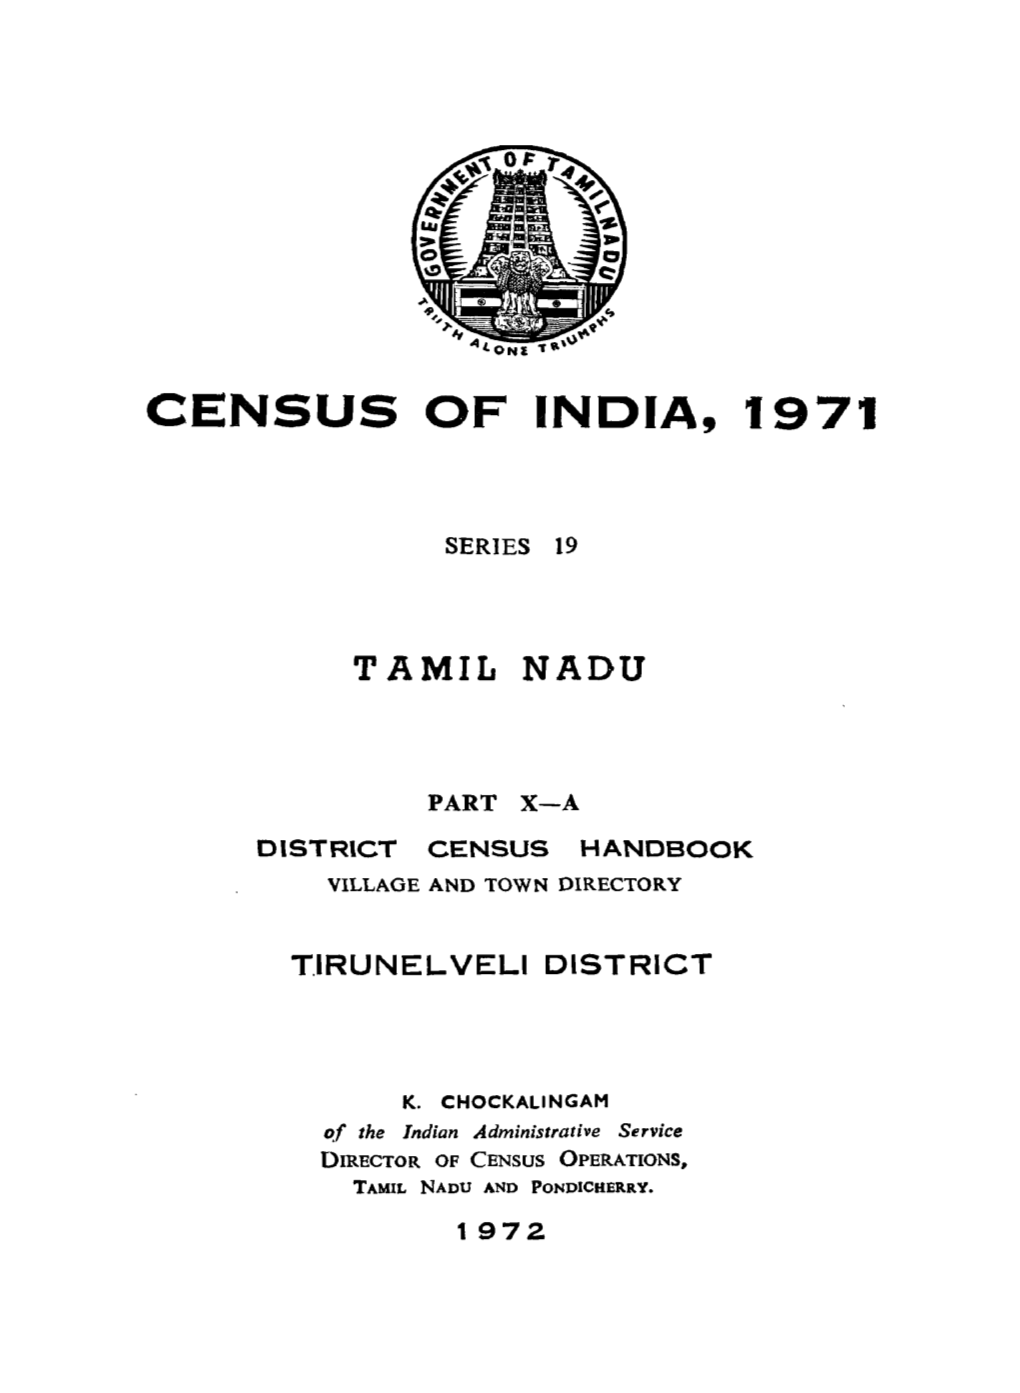 District Census Handbook, Tirunelveli, Part X-A, Series-19